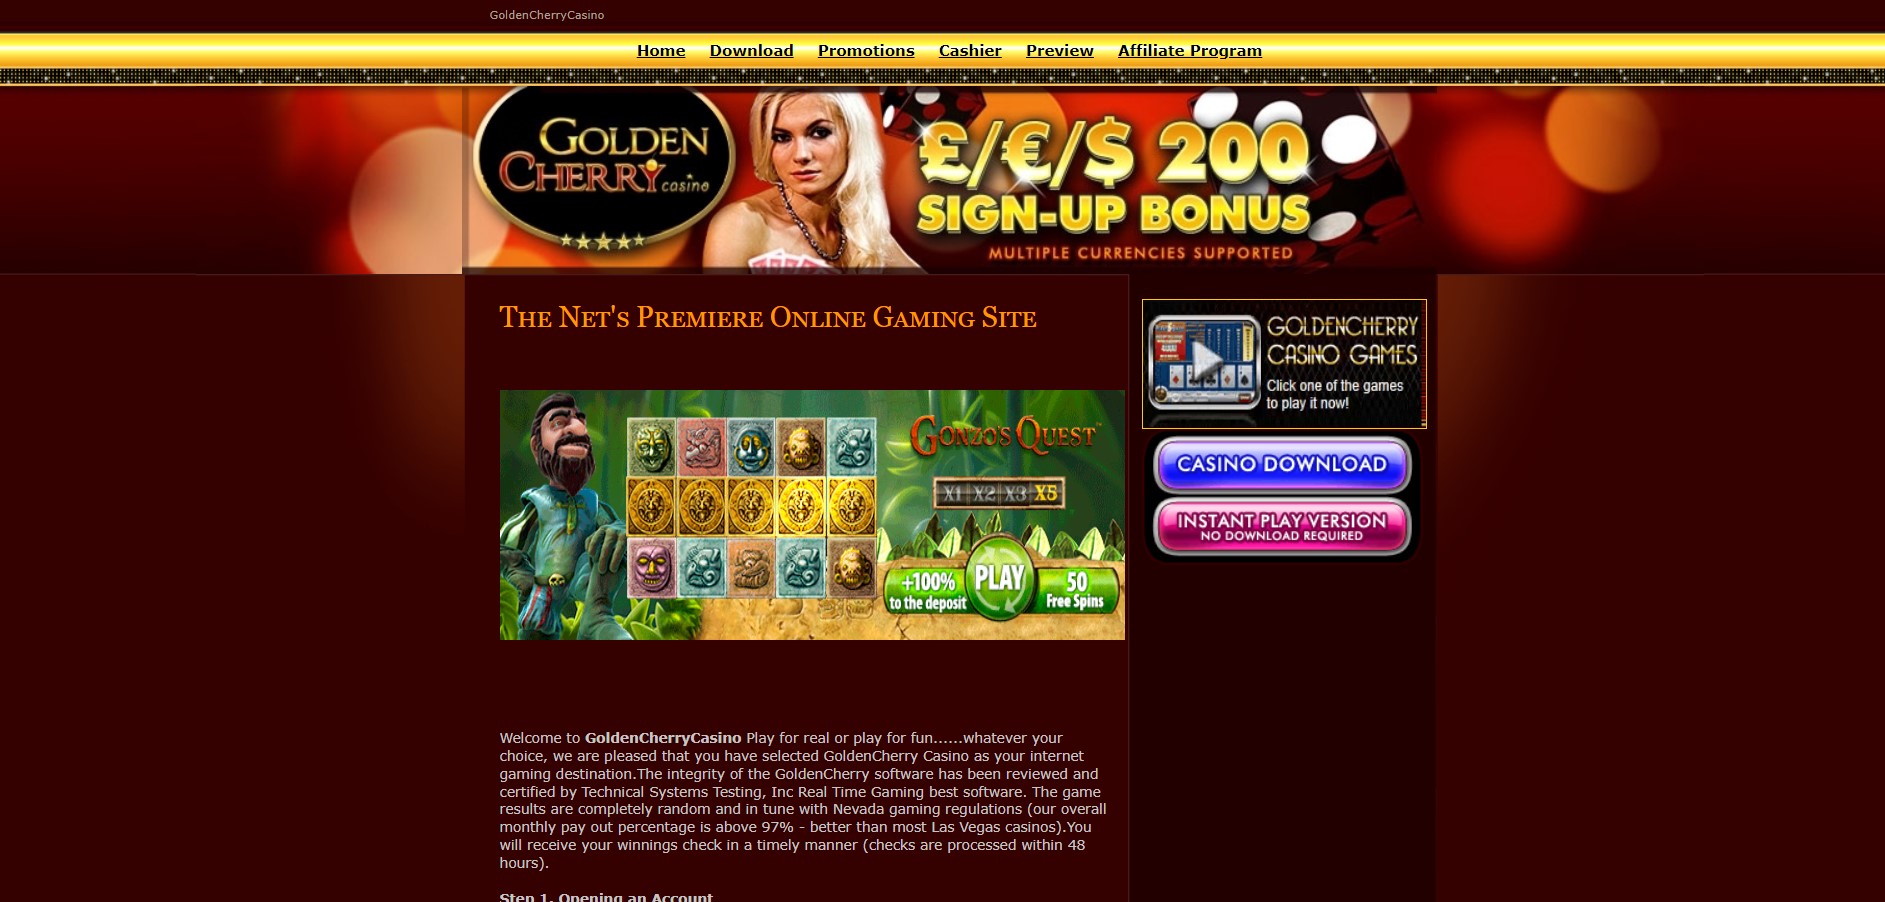 Golden Cherry online casino review